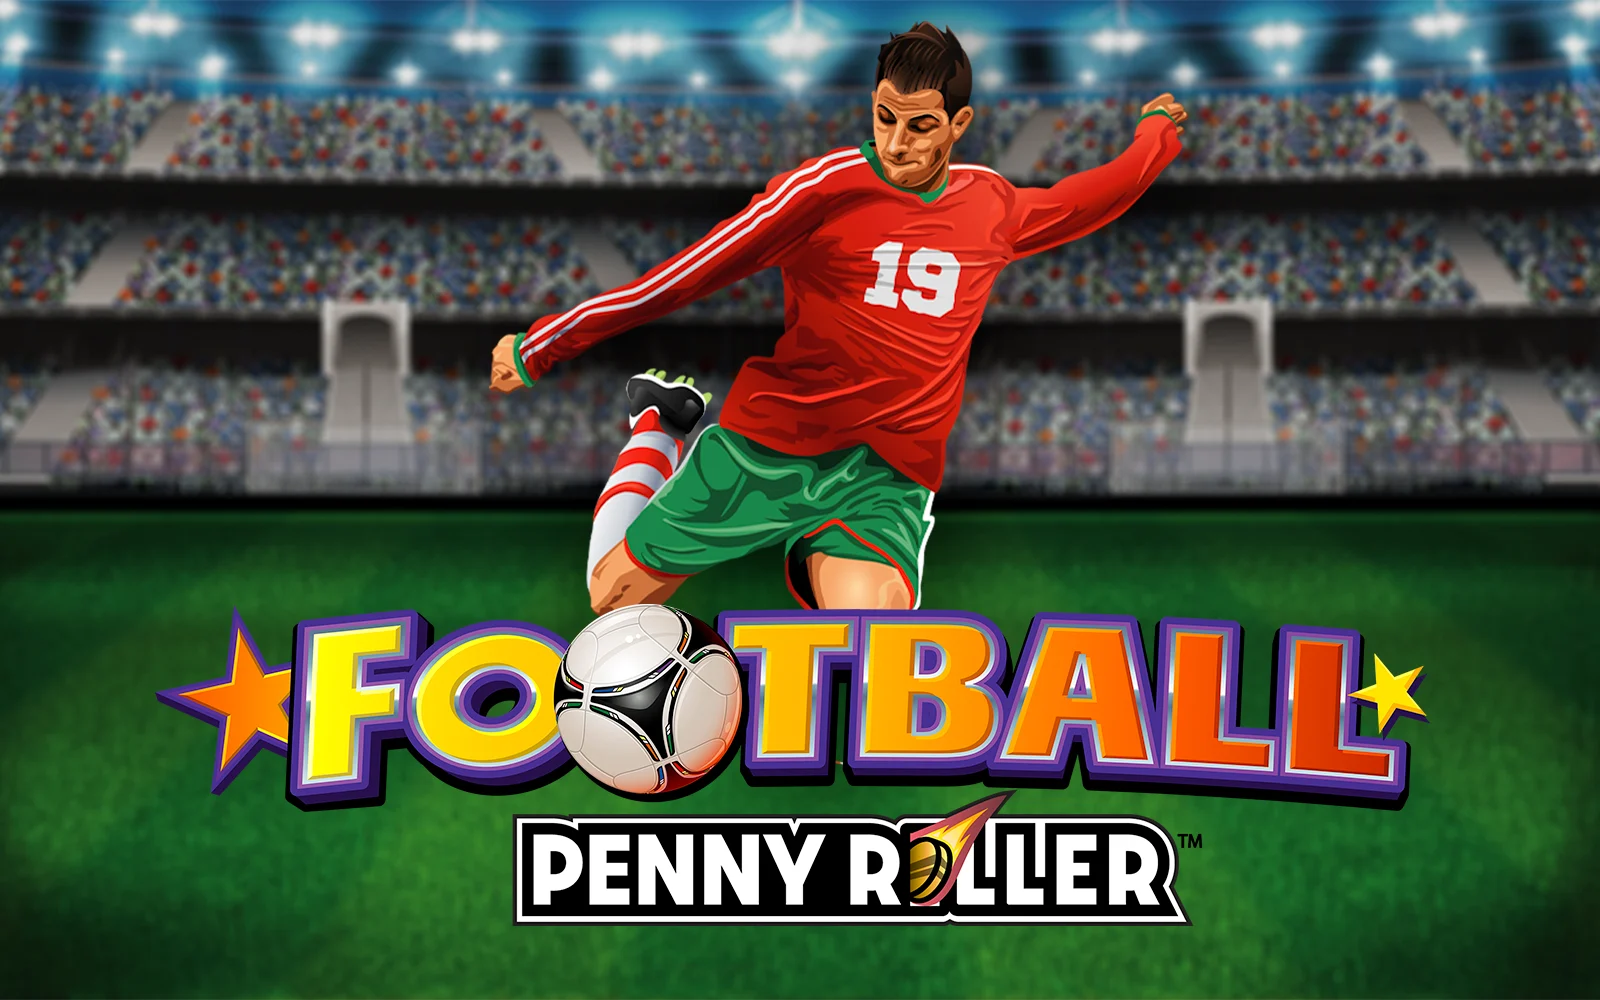 Jogue Football Penny Roller™ no casino online Starcasino.be 